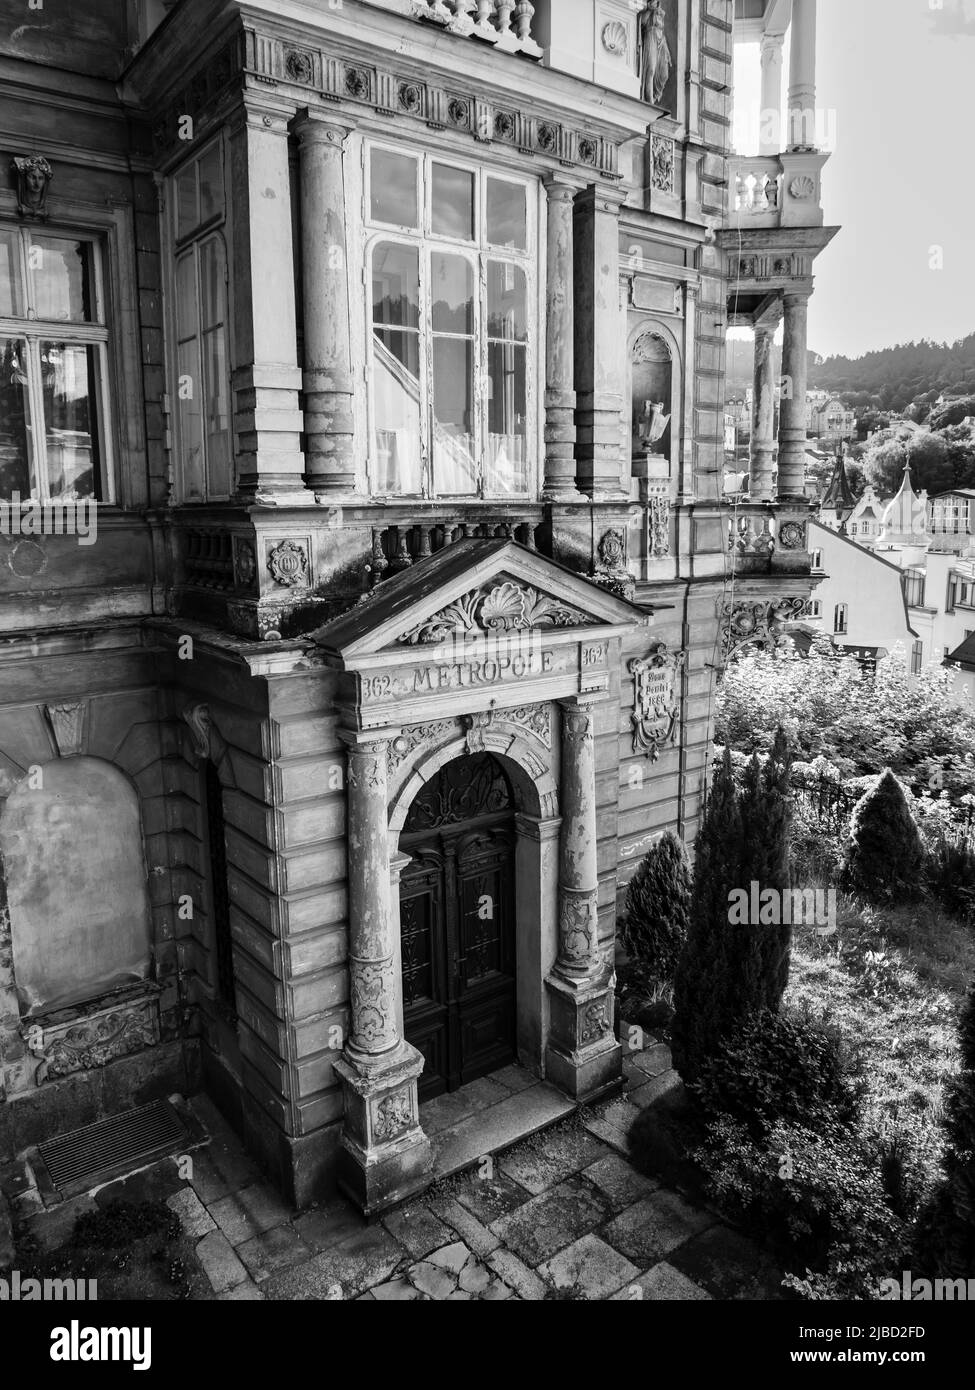 Casa Dum Metropole Antiguo edificio en Carlsbad o Karlovy Vary, Bohemia, República Checa Foto de stock